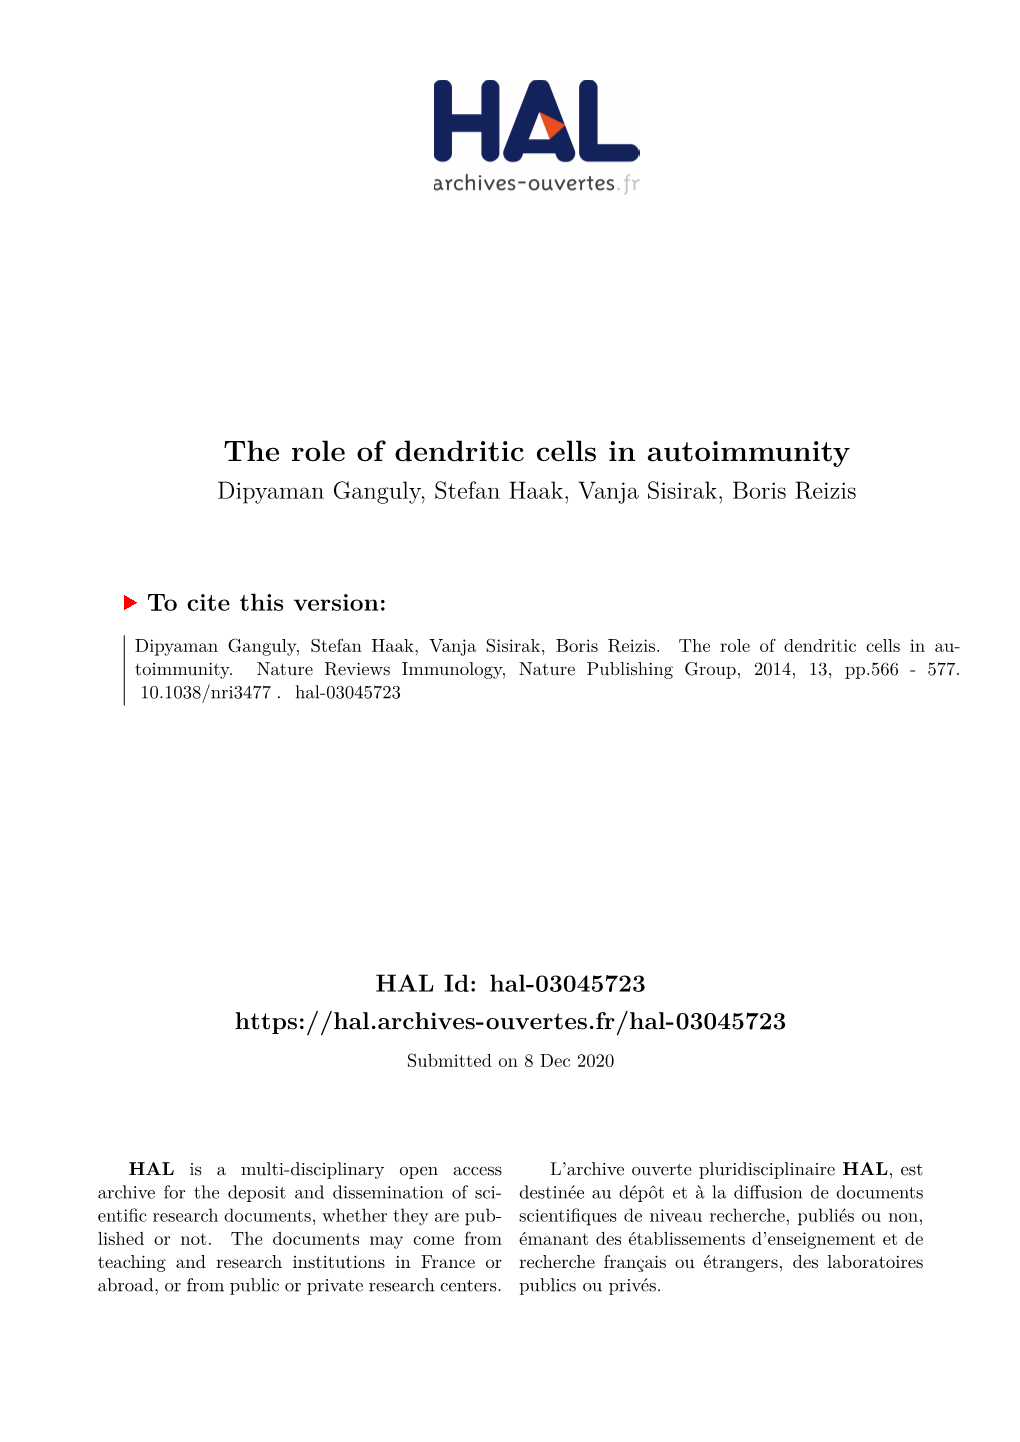 The Role of Dendritic Cells in Autoimmunity Dipyaman Ganguly, Stefan Haak, Vanja Sisirak, Boris Reizis